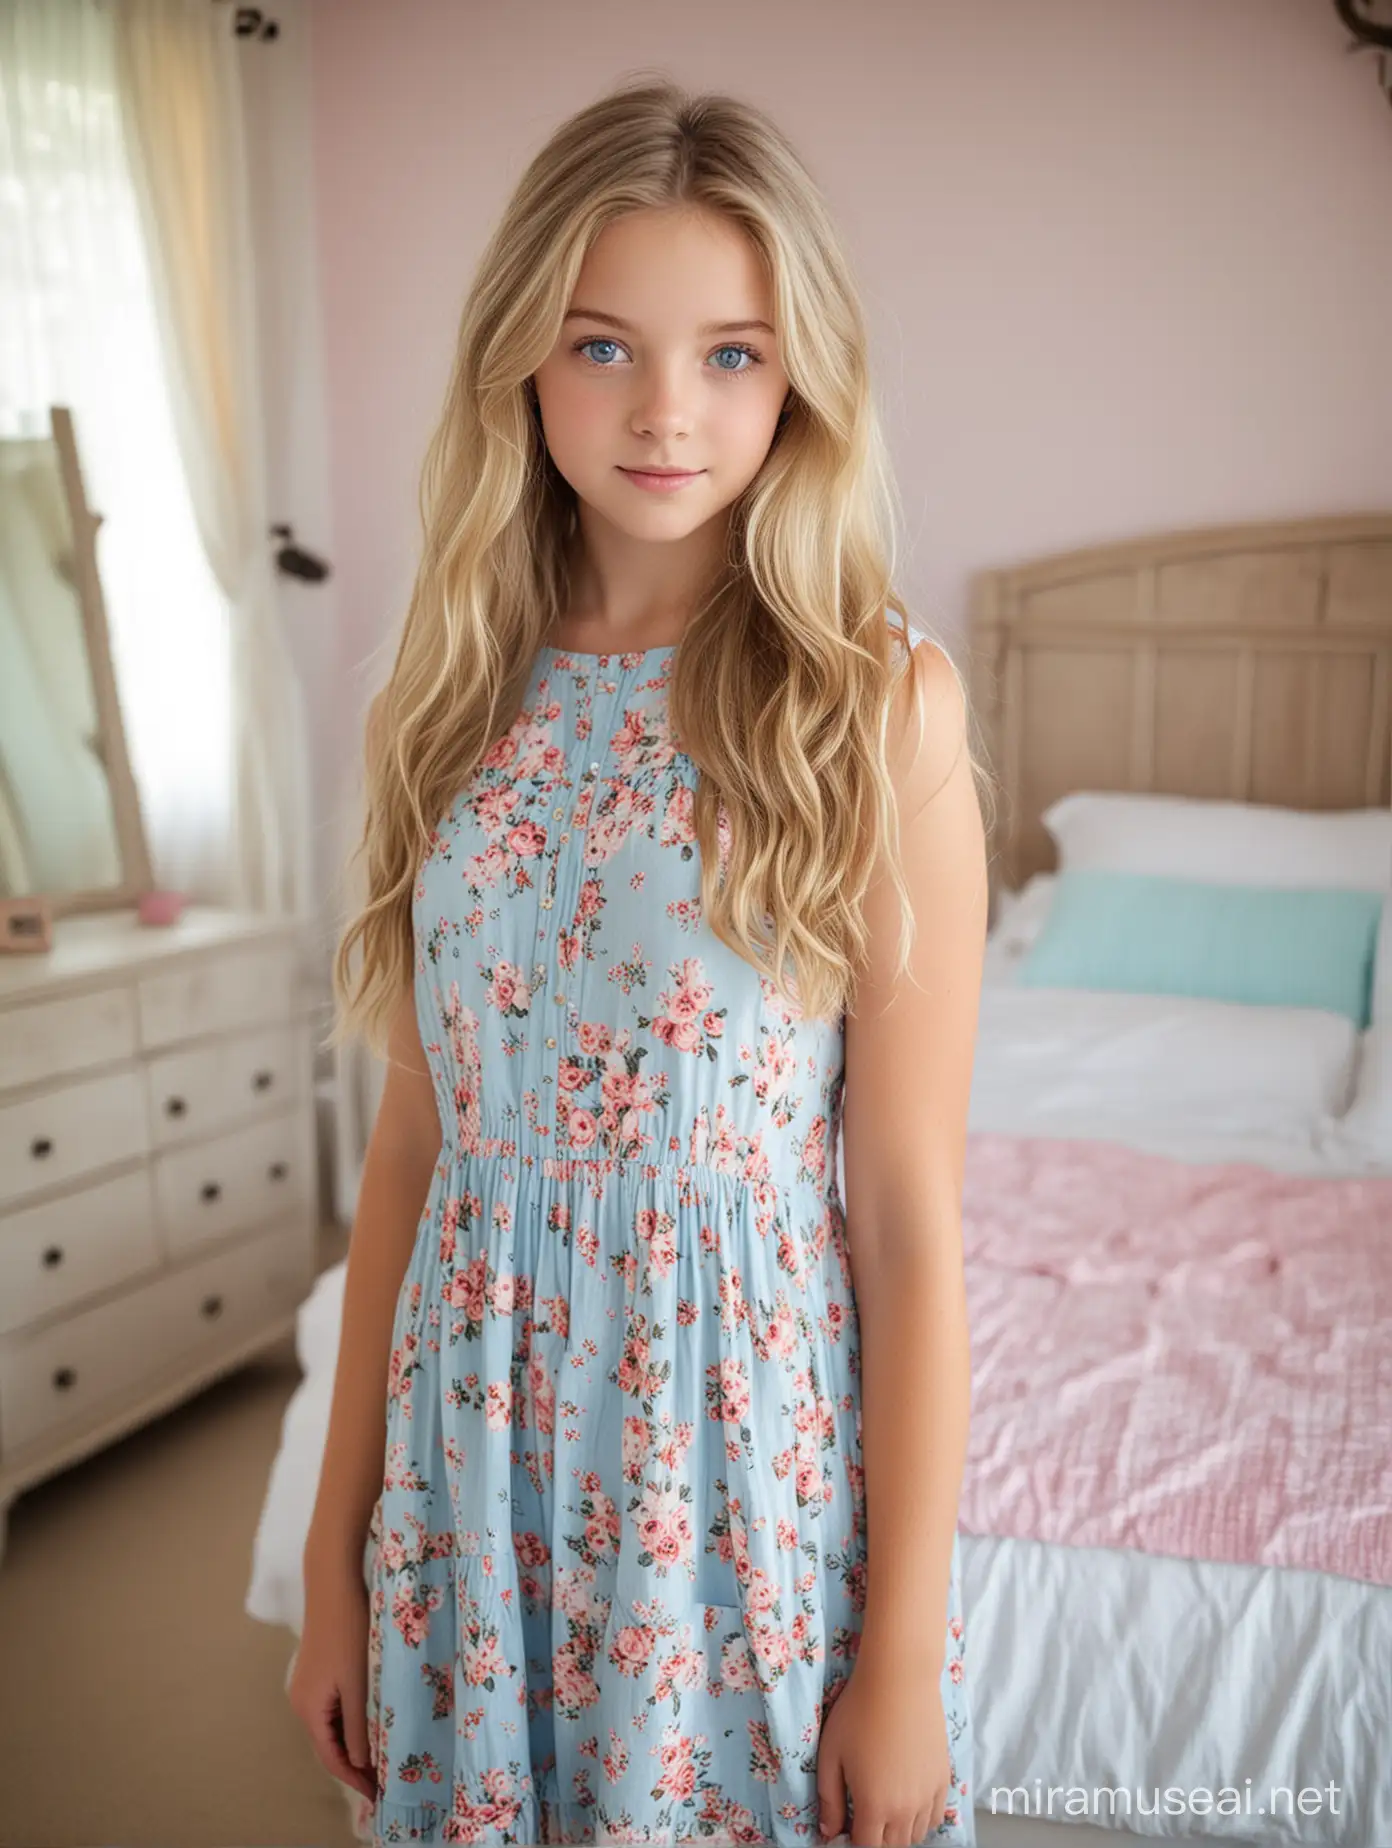 Adorable 14YearOld Girl in Beautiful Sundress Posing in Bedroom